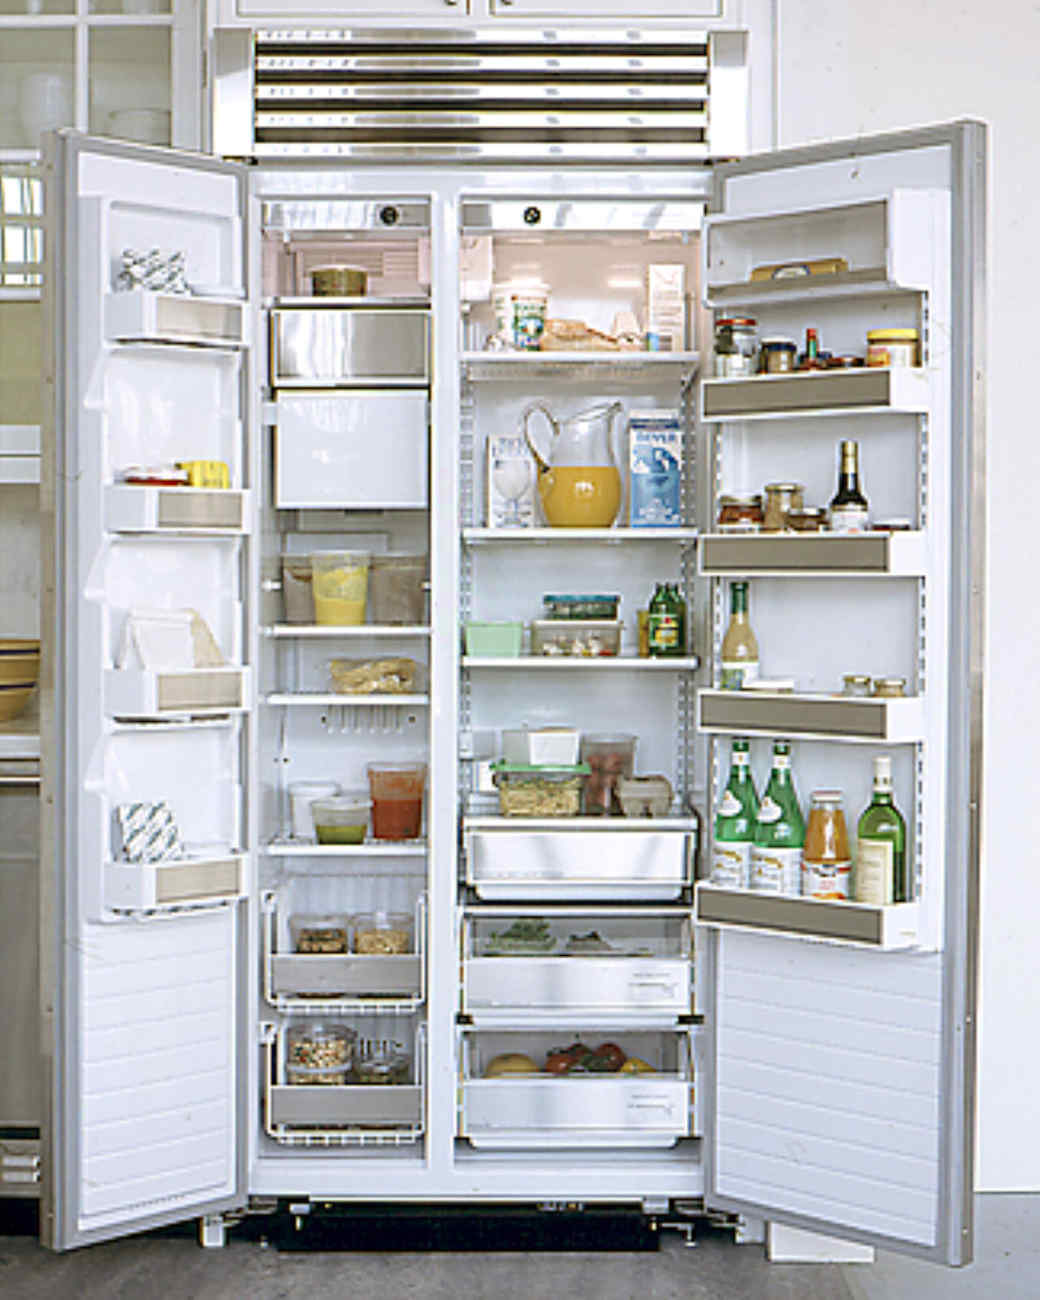 Cleaning your fridge | www.marthastewart.com 